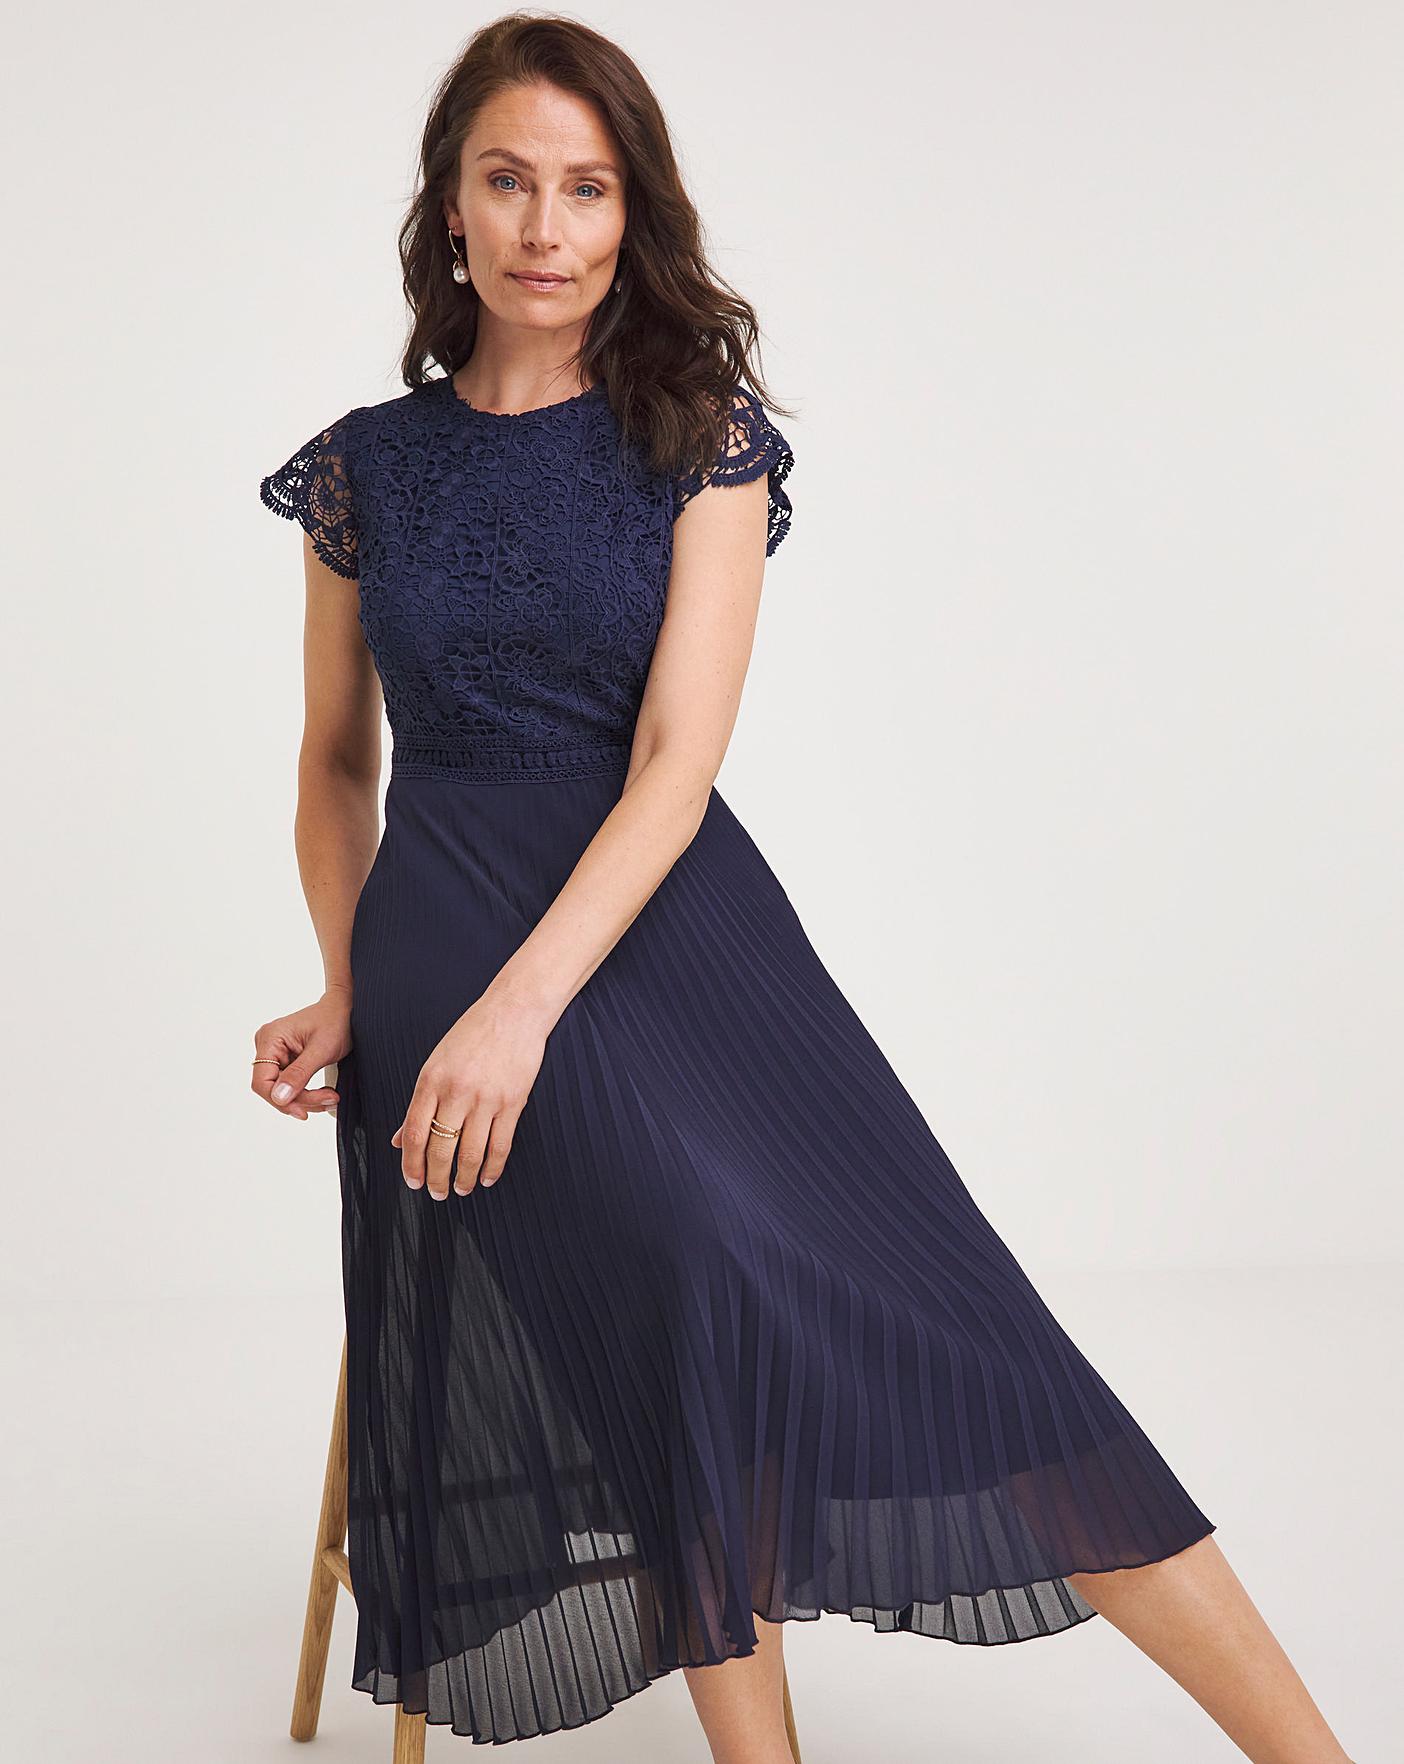 Joanna Hope Lace Top Pleated Skirt Dress | Marisota